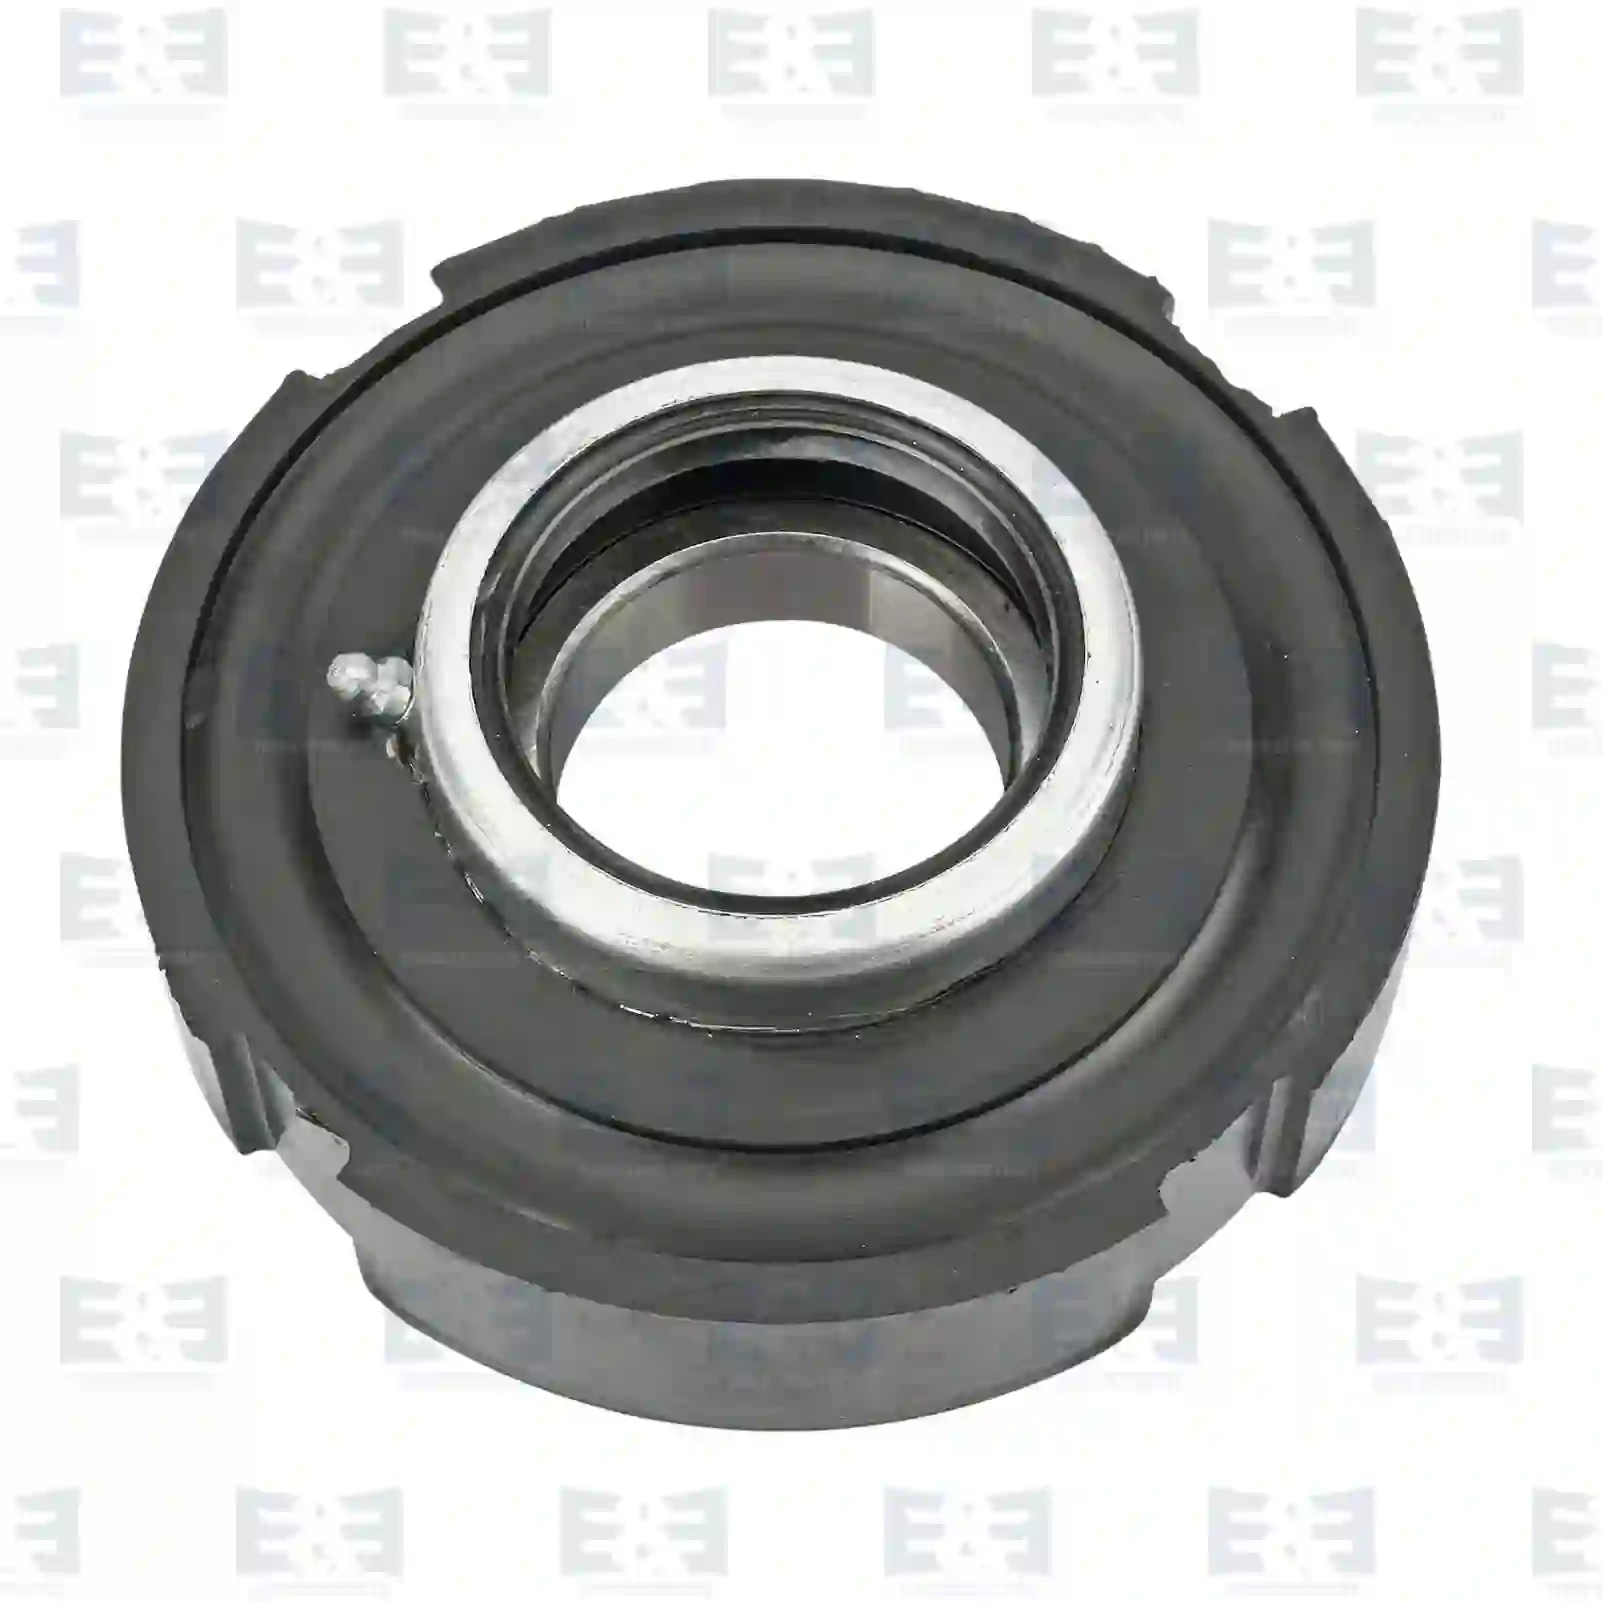  Center bearing, complete || E&E Truck Spare Parts | Truck Spare Parts, Auotomotive Spare Parts